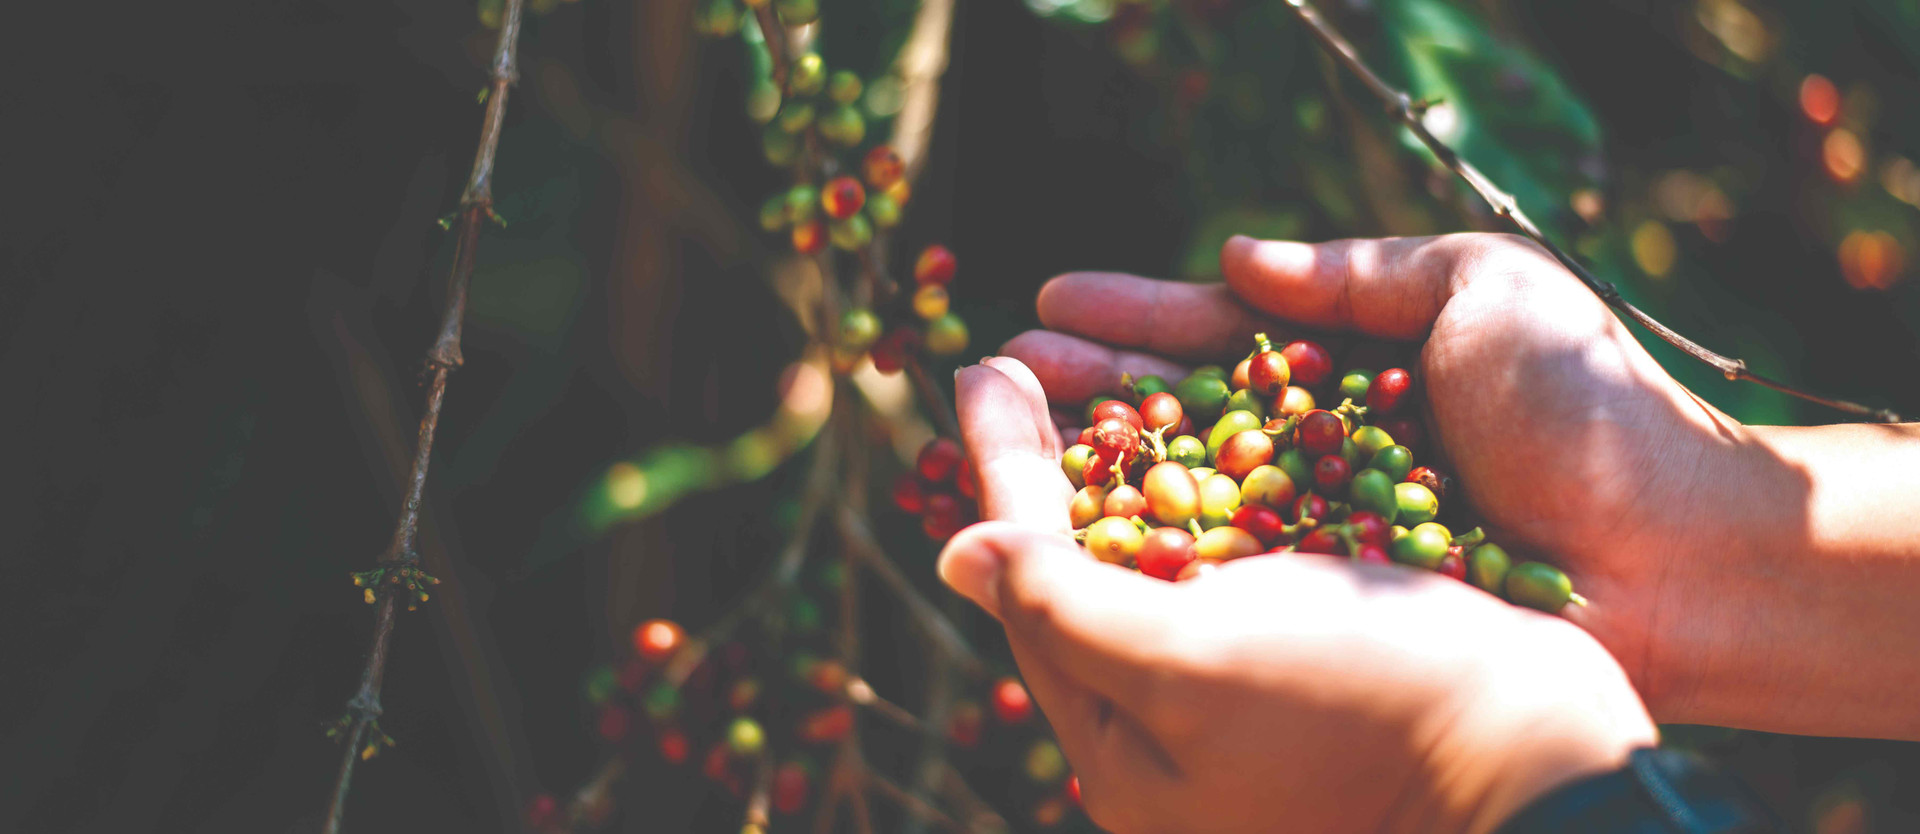 closeup-agriculturist-hands-holding-fresh-arabica-coffee-berries-coffee-plantation-farmer-picking-coffee-bean-coffee-process-agriculture-compressed.jpeg